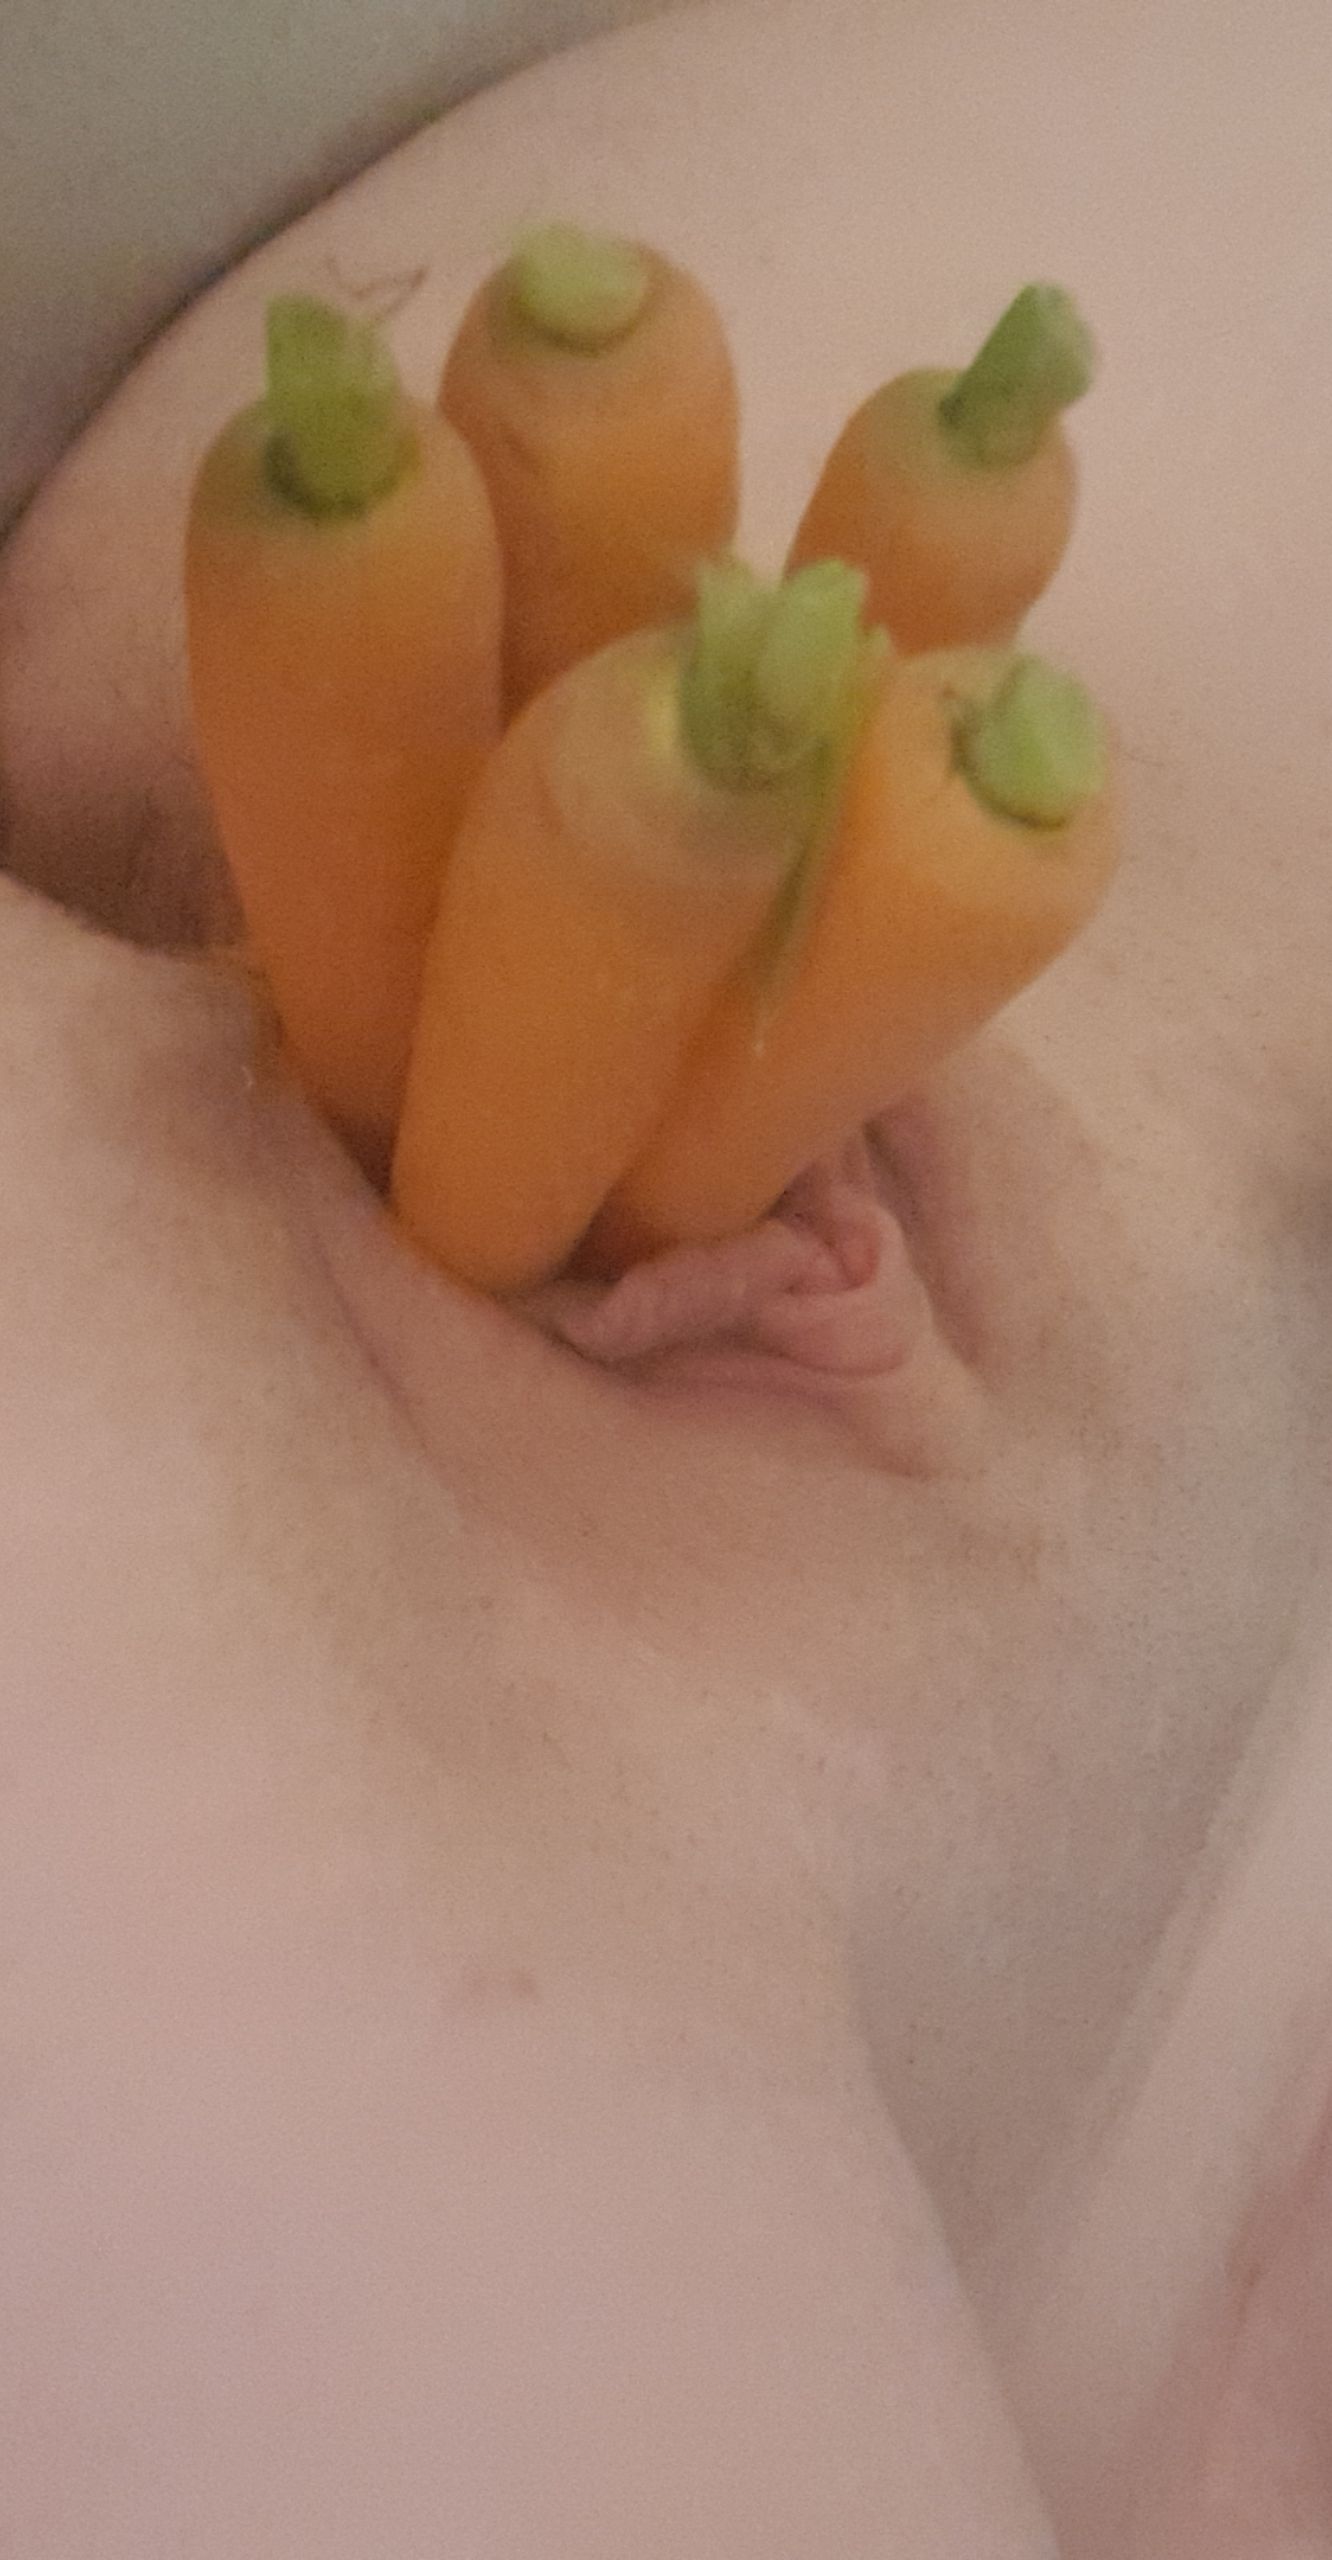 Carrot Fuck